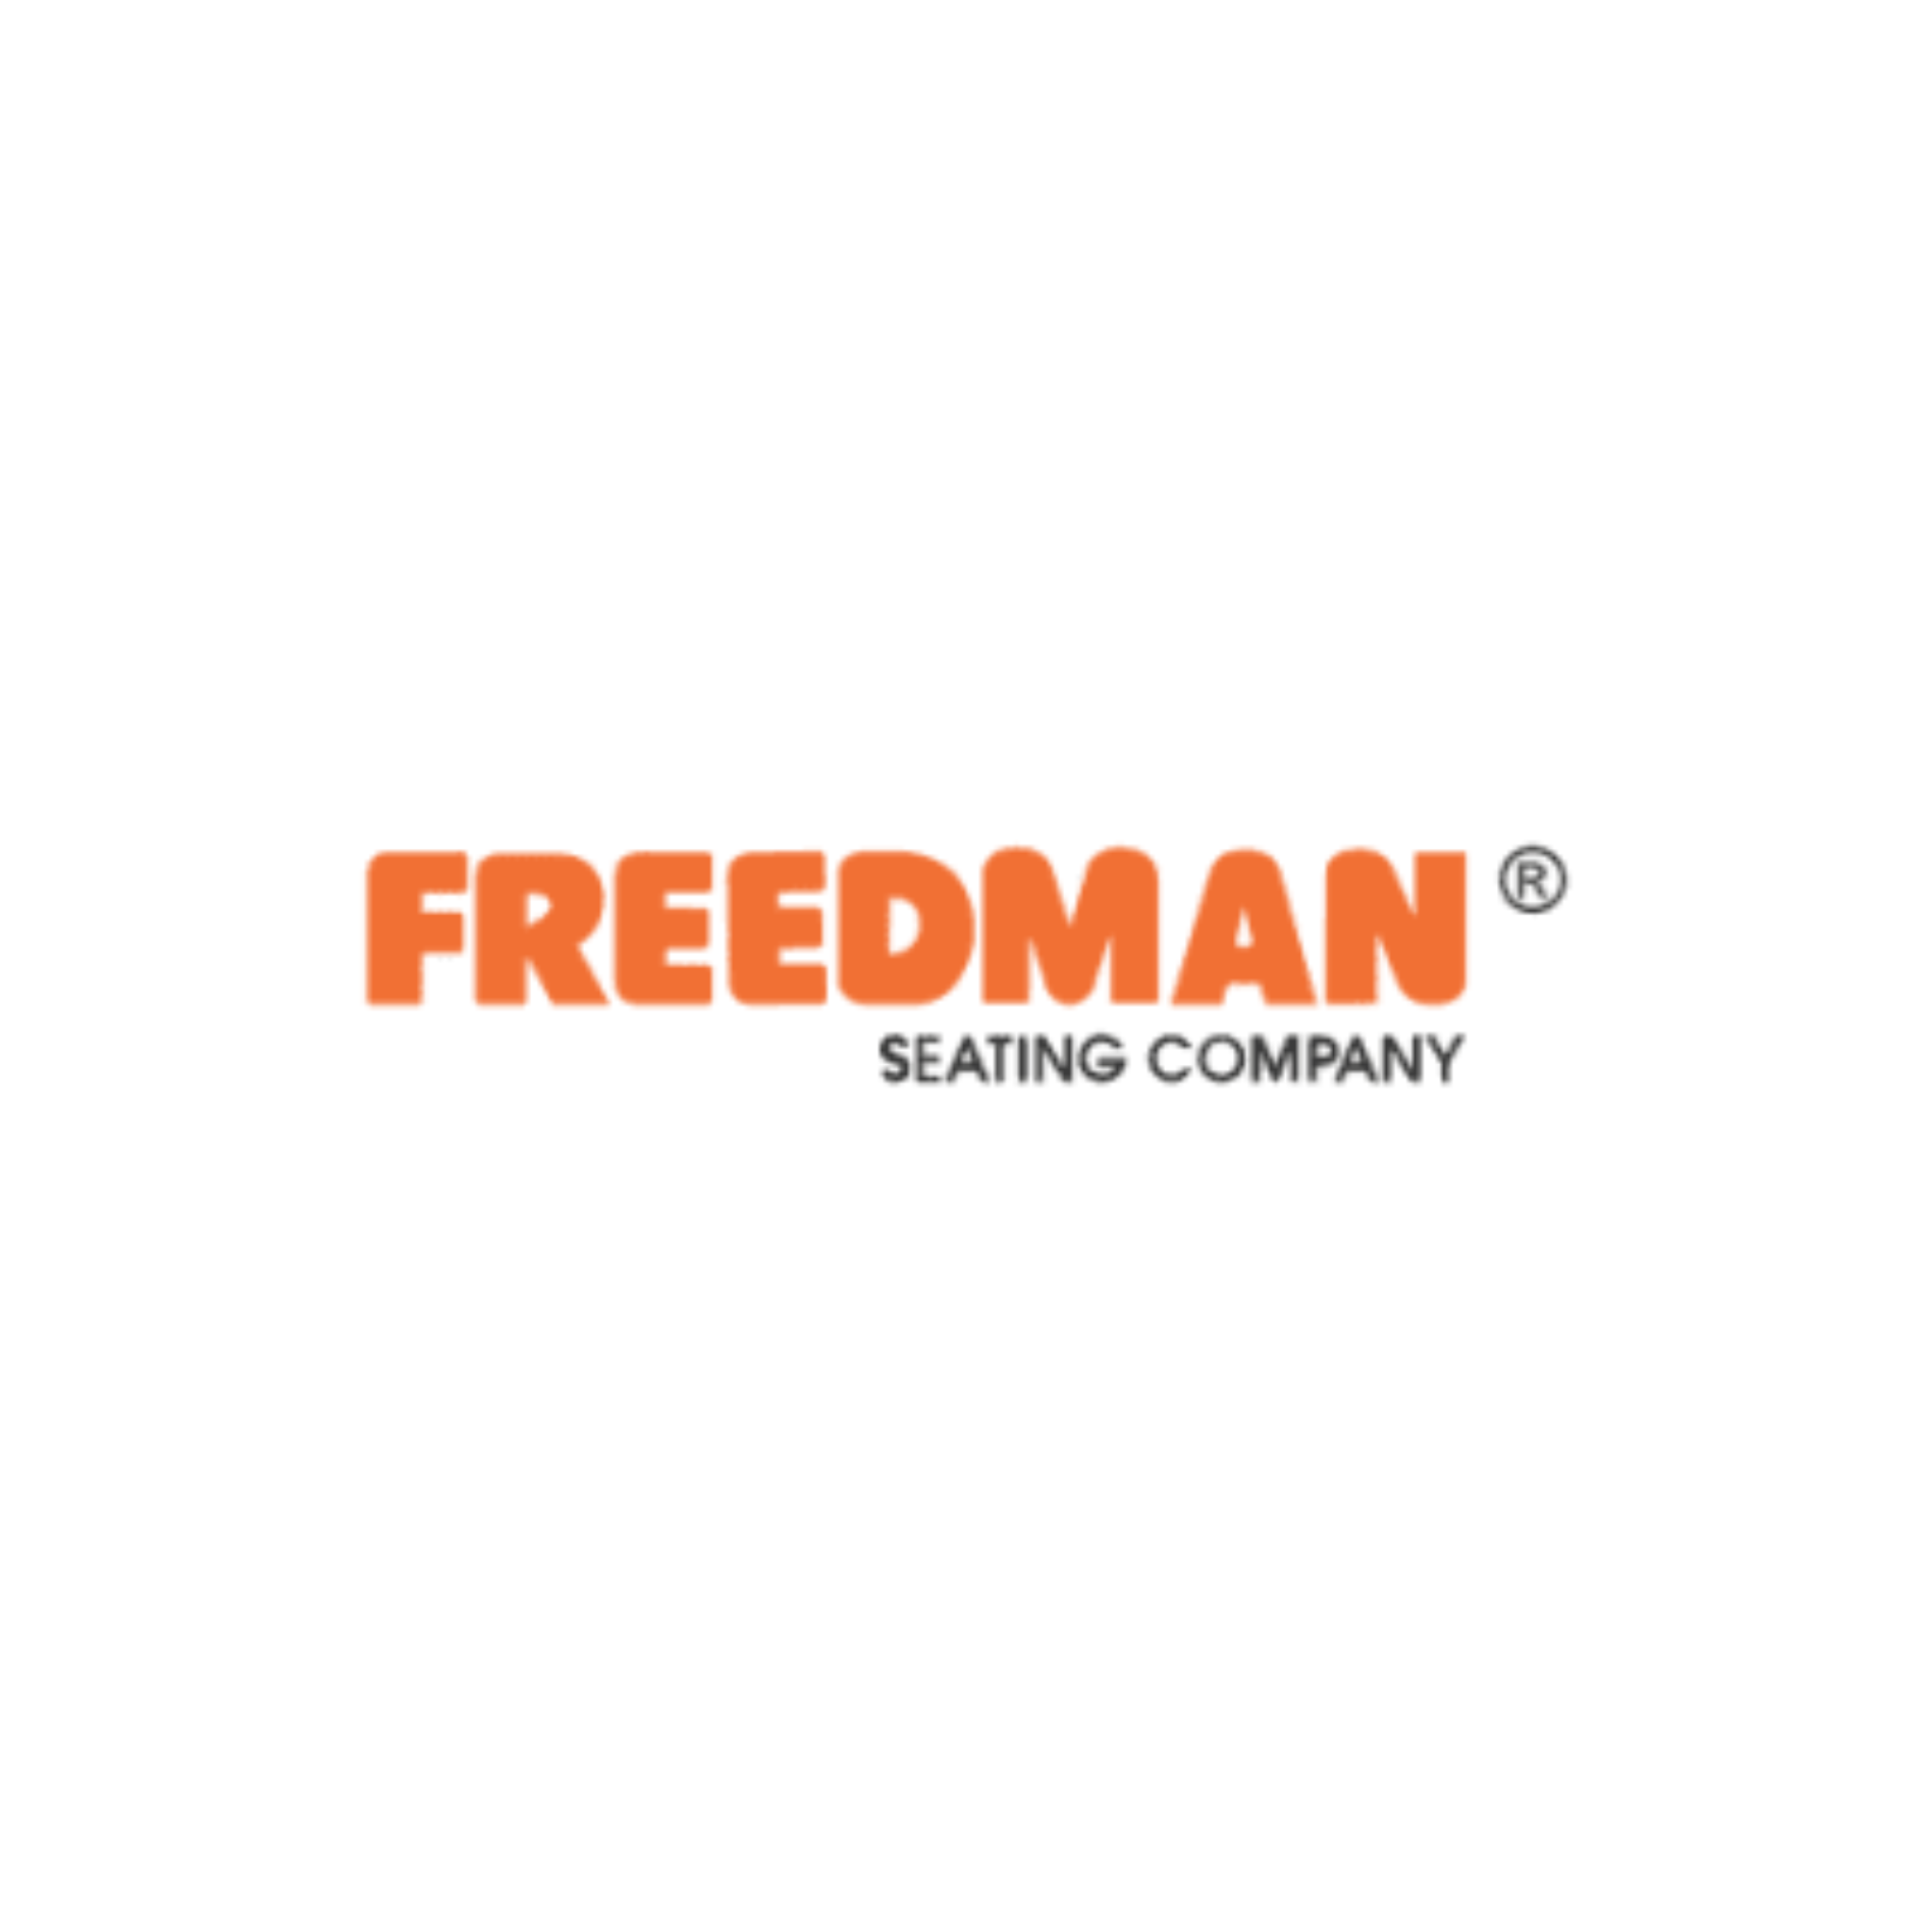 Freedman Seating Company